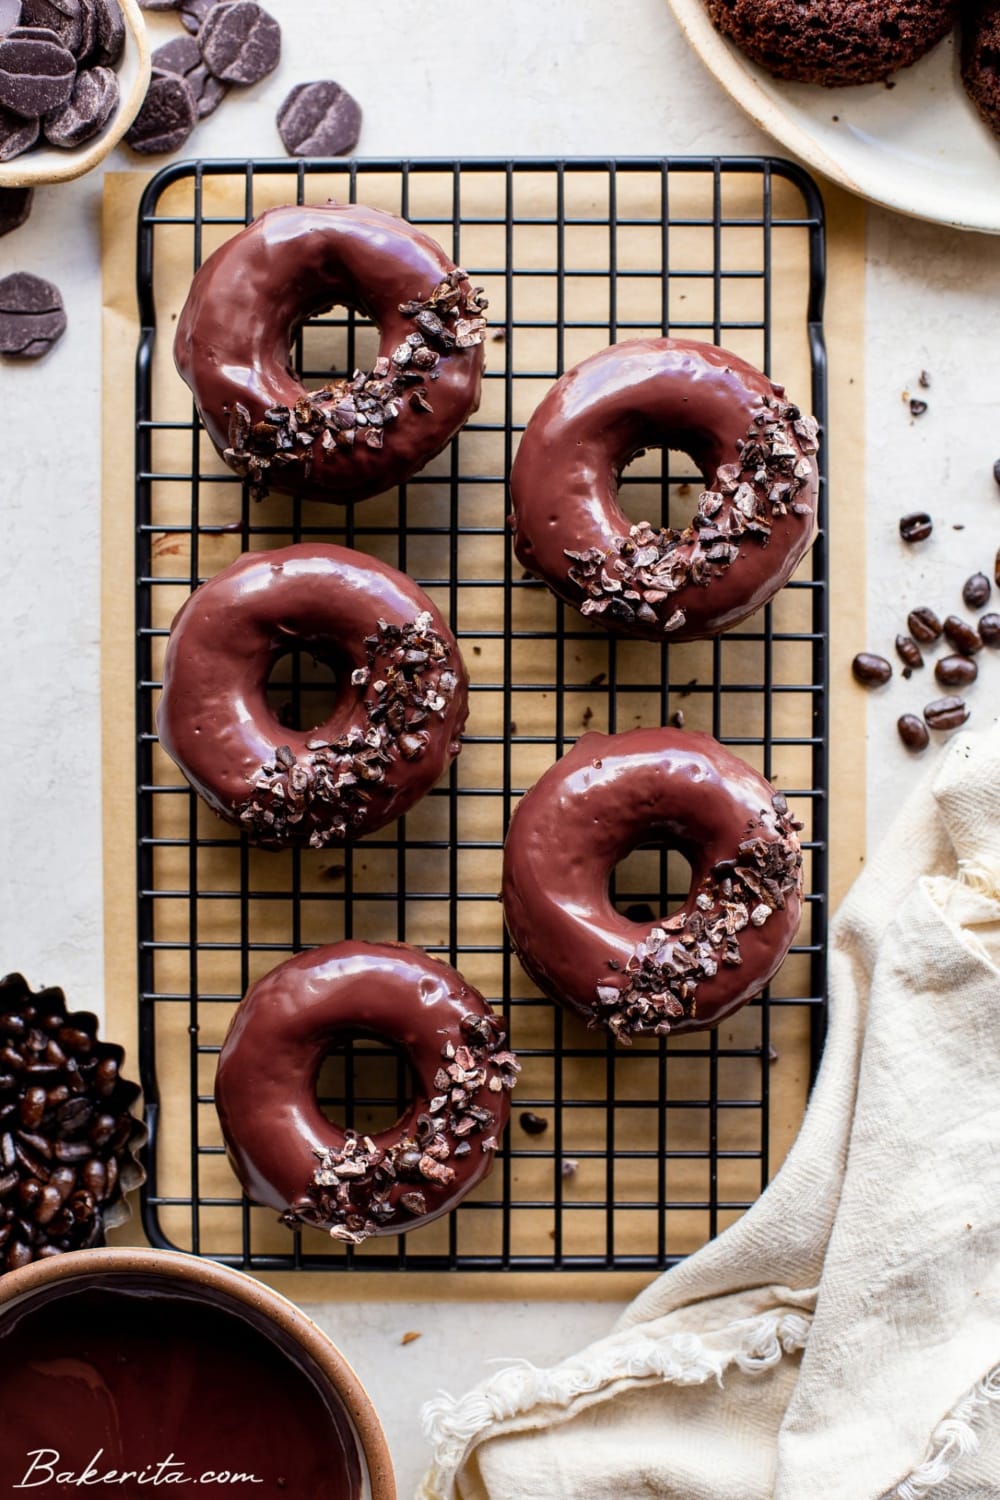 Gluten-Free Chocolate Coffee Donuts